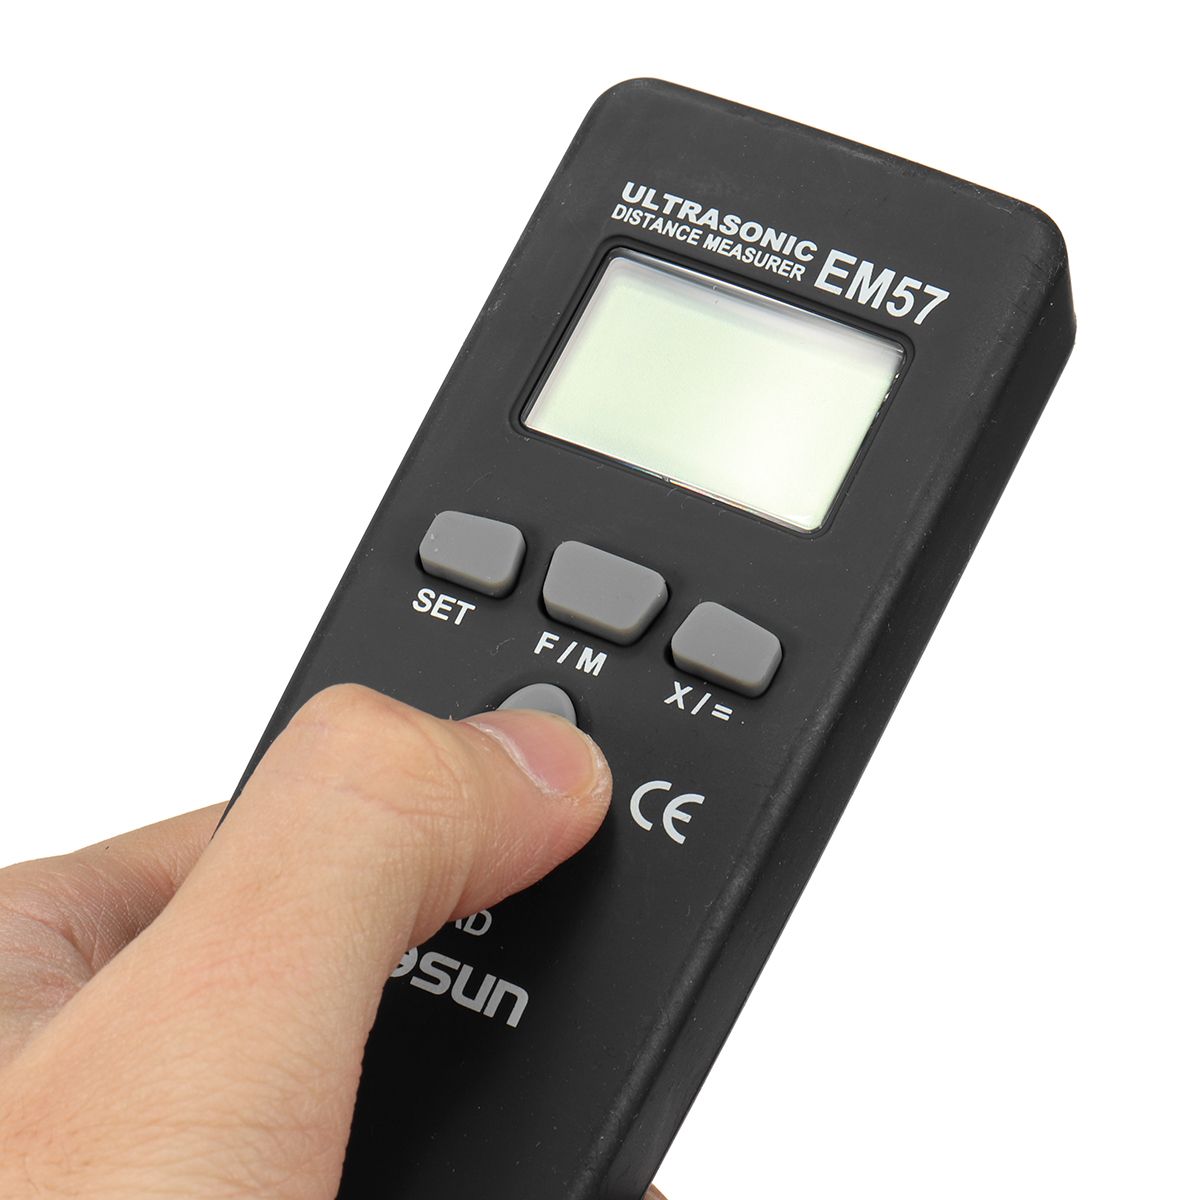 Ultrasonic-Distance-Measurer-Telemetre-Mini-Range-Finder-Contractor-grade-1263036